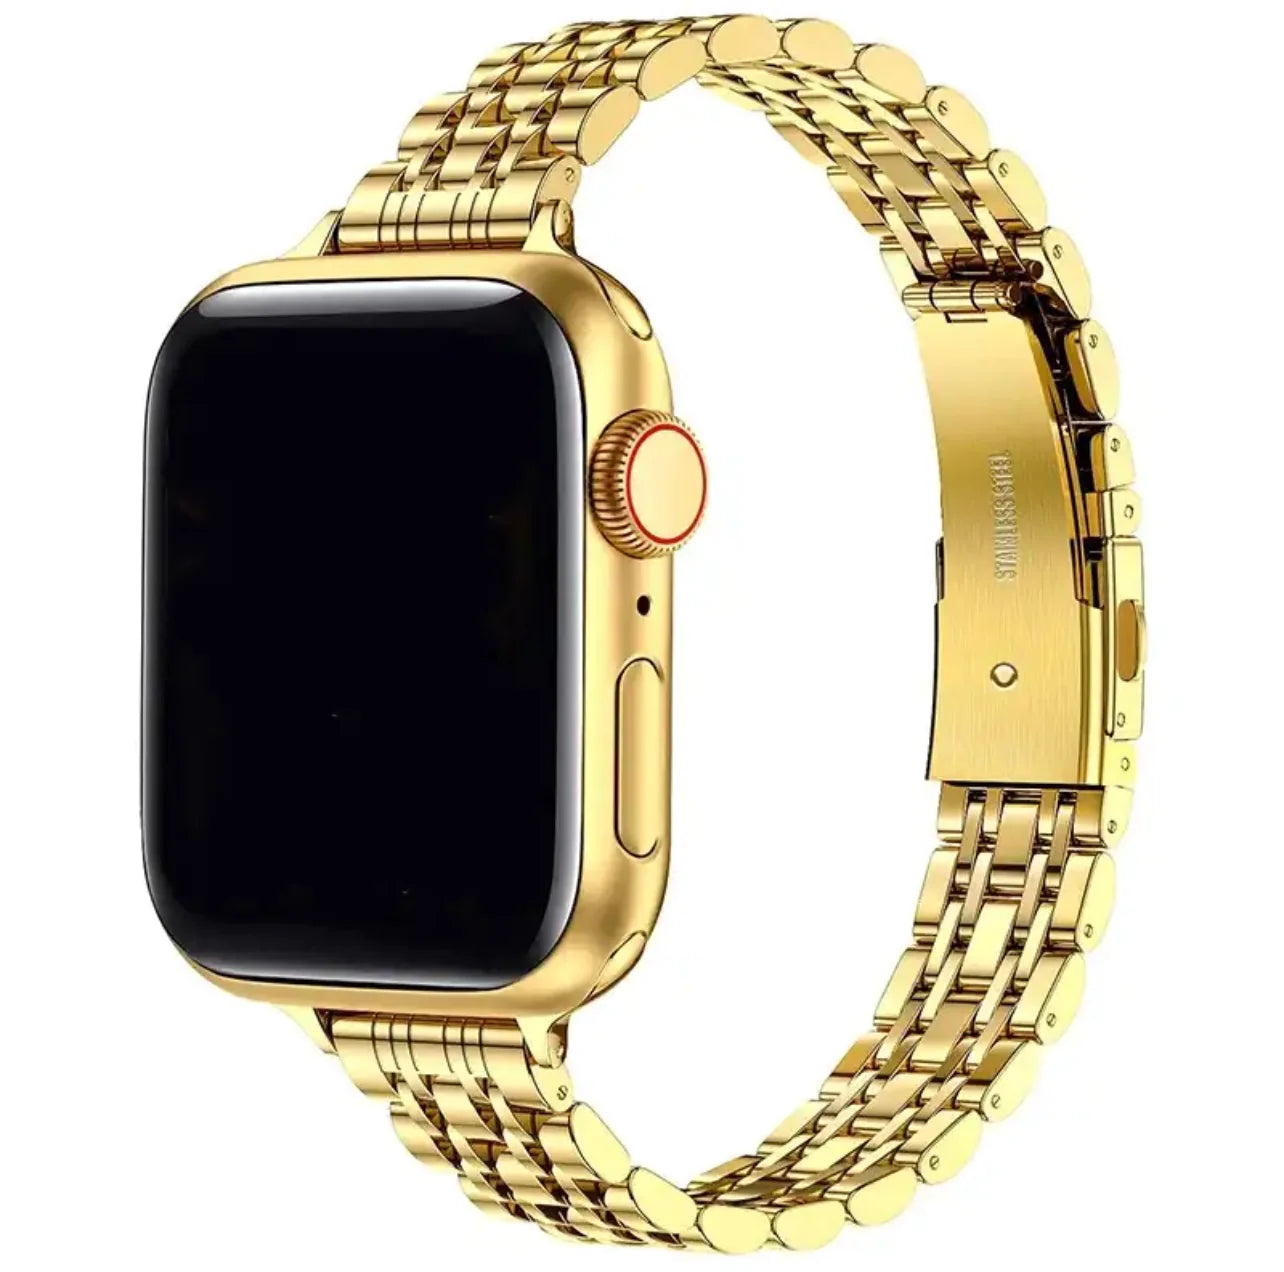 MADISON Premium Apple Watch Strap